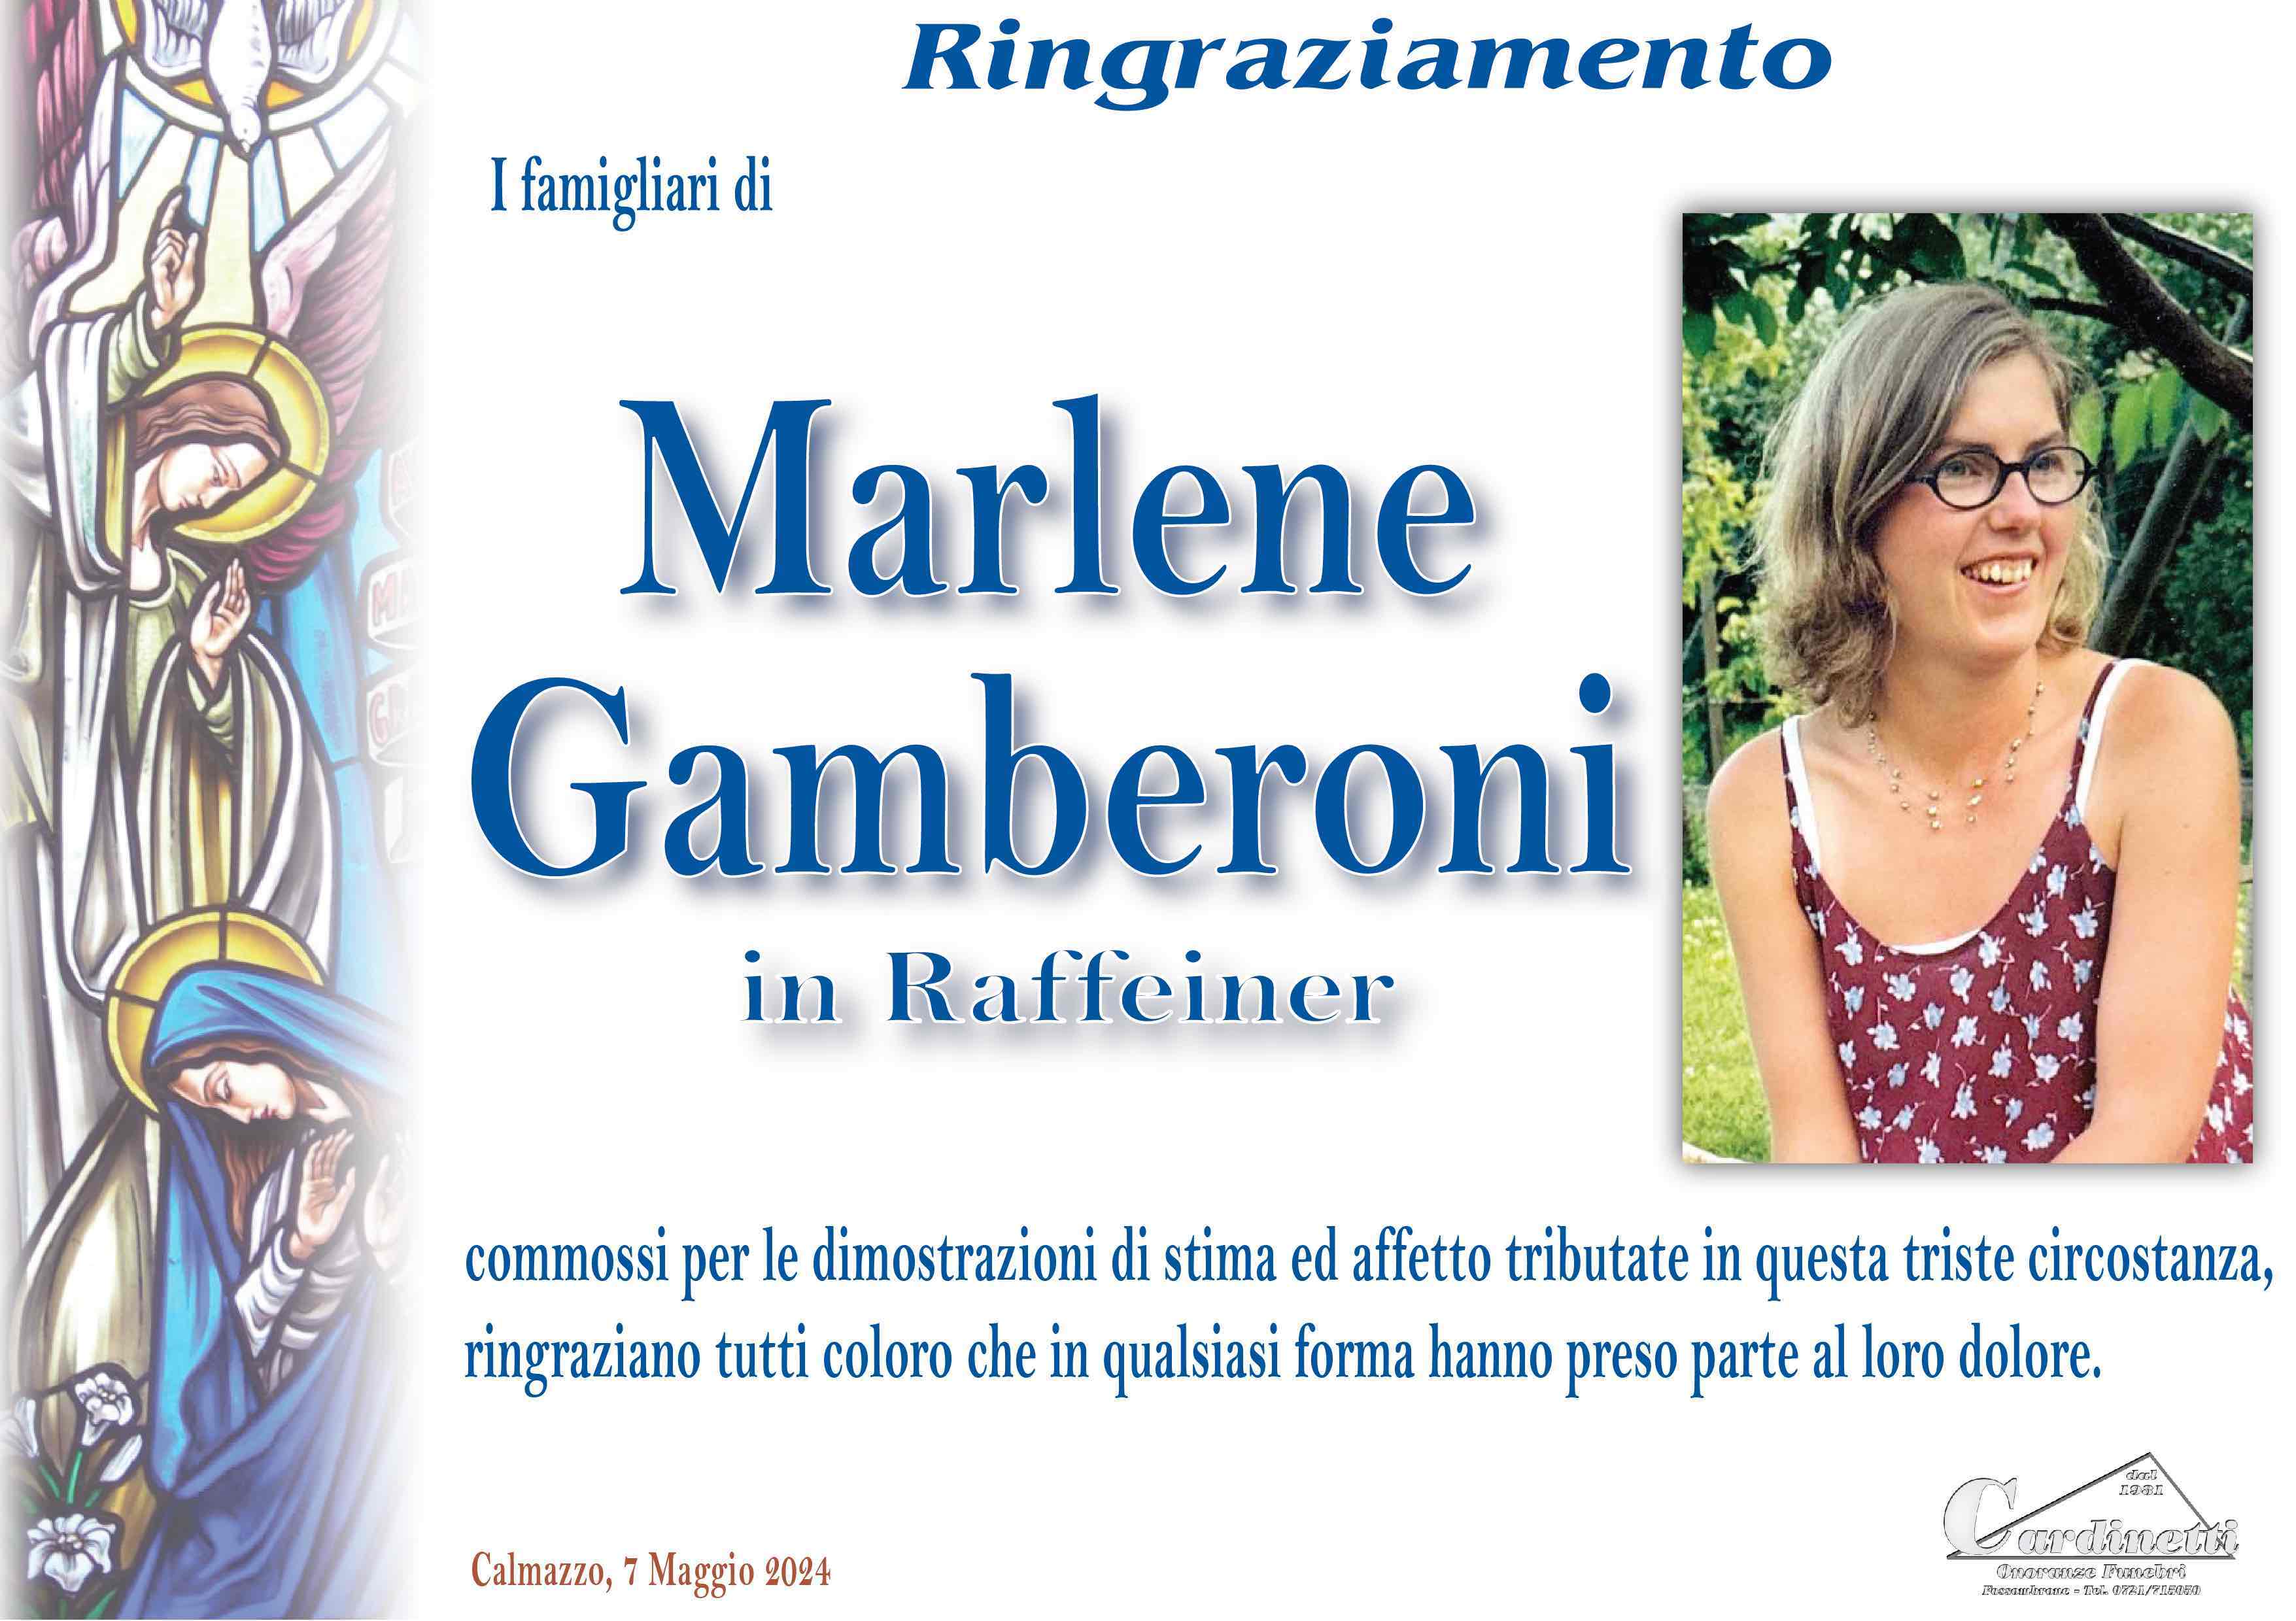 Marlene Gamberoni